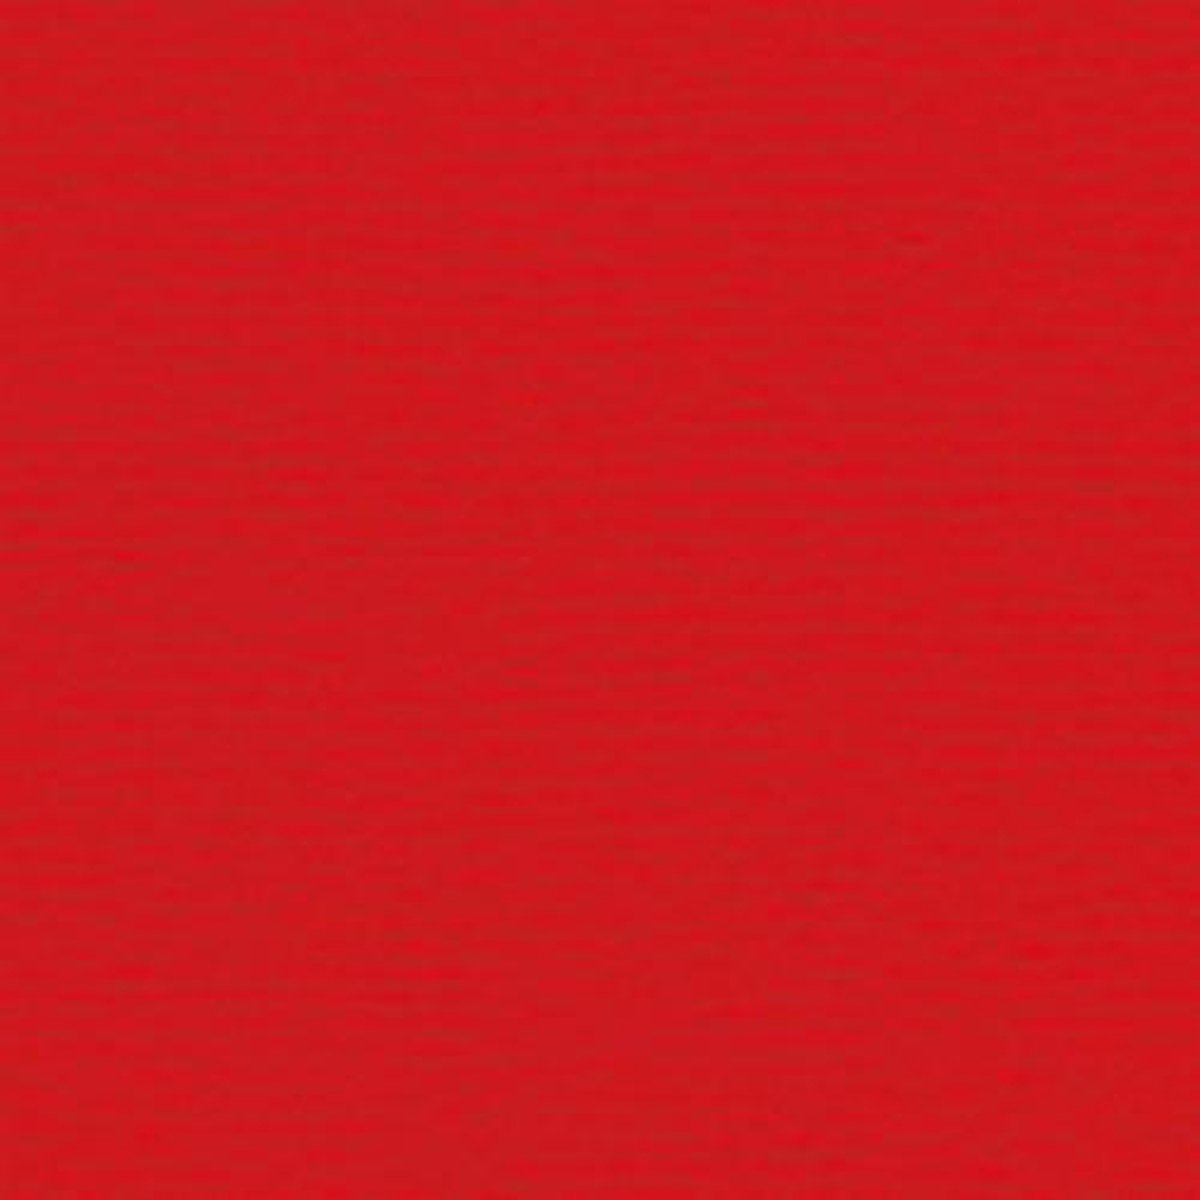 Papicolor Scrapbook 302x302mm rood 200gr-CV 10 vel 298918 - 302x302mm